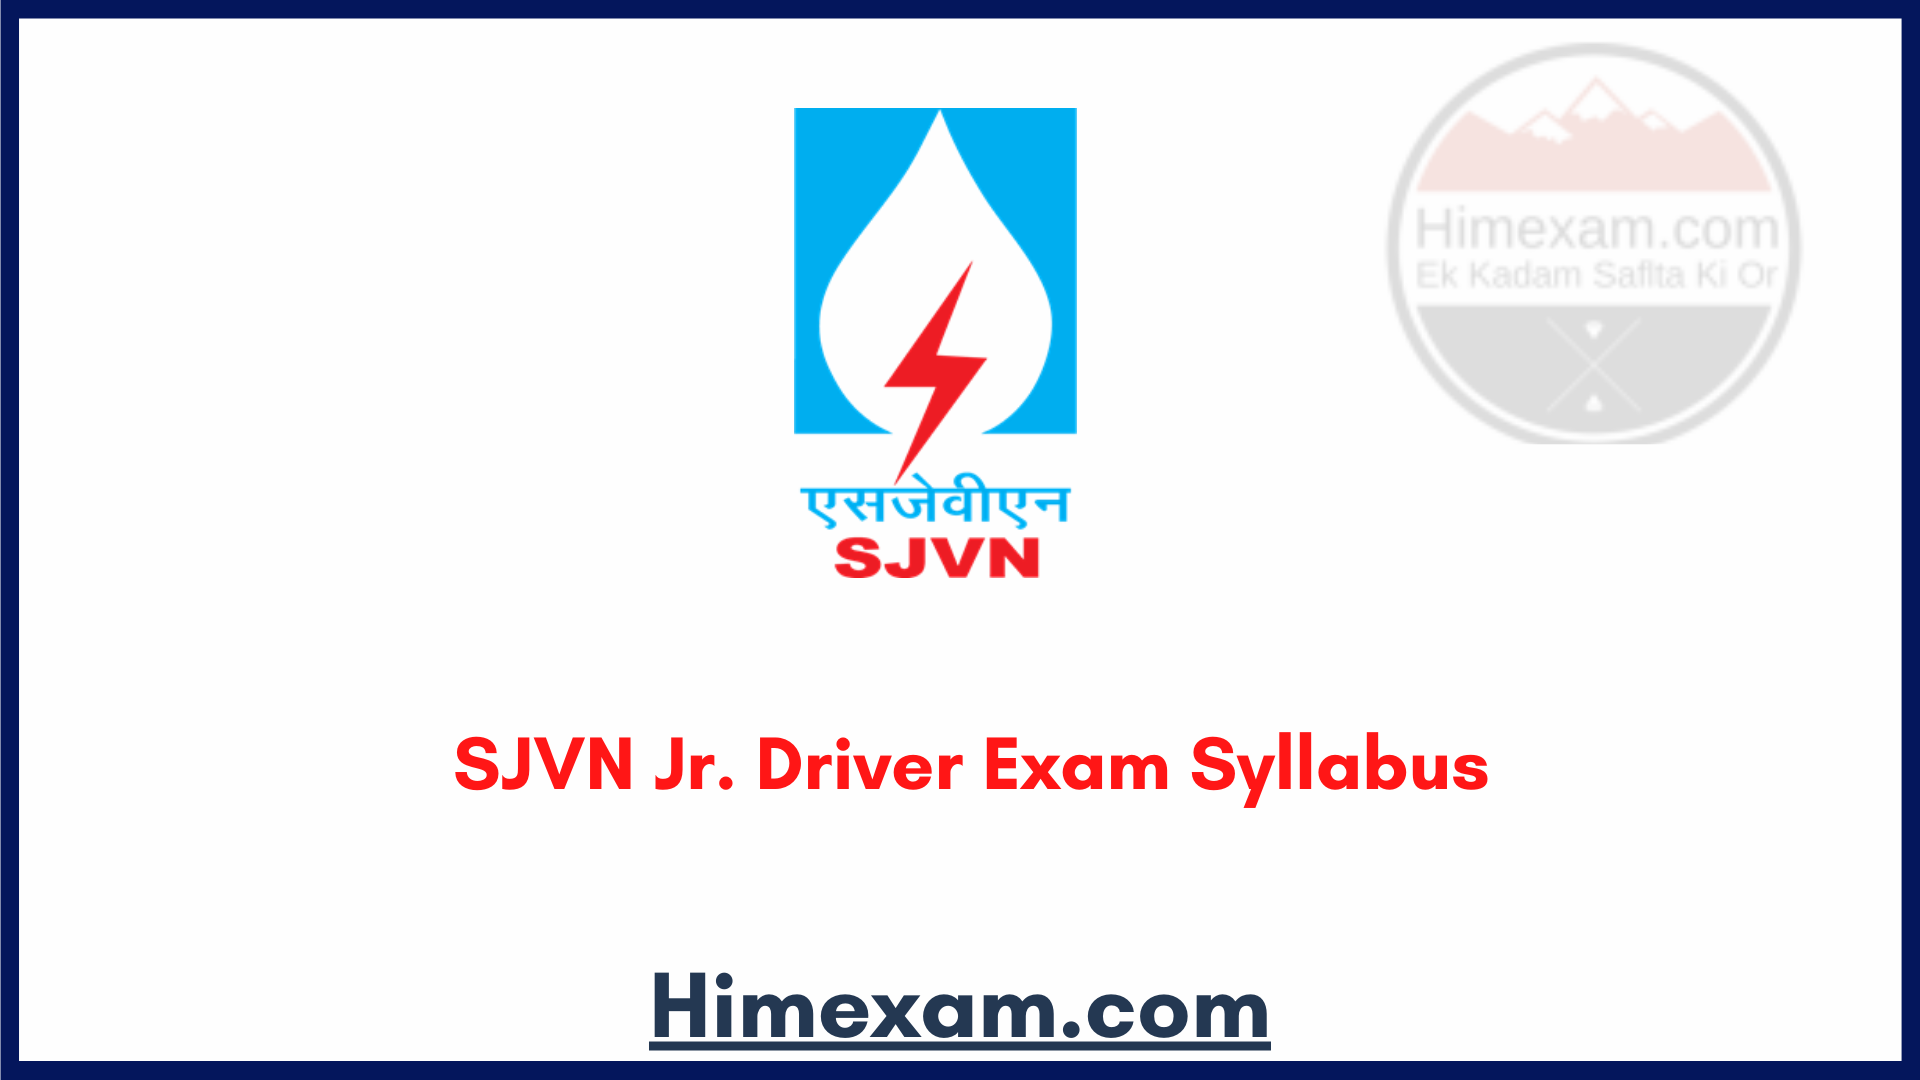 SJVN Jr. Driver Exam Syllabus